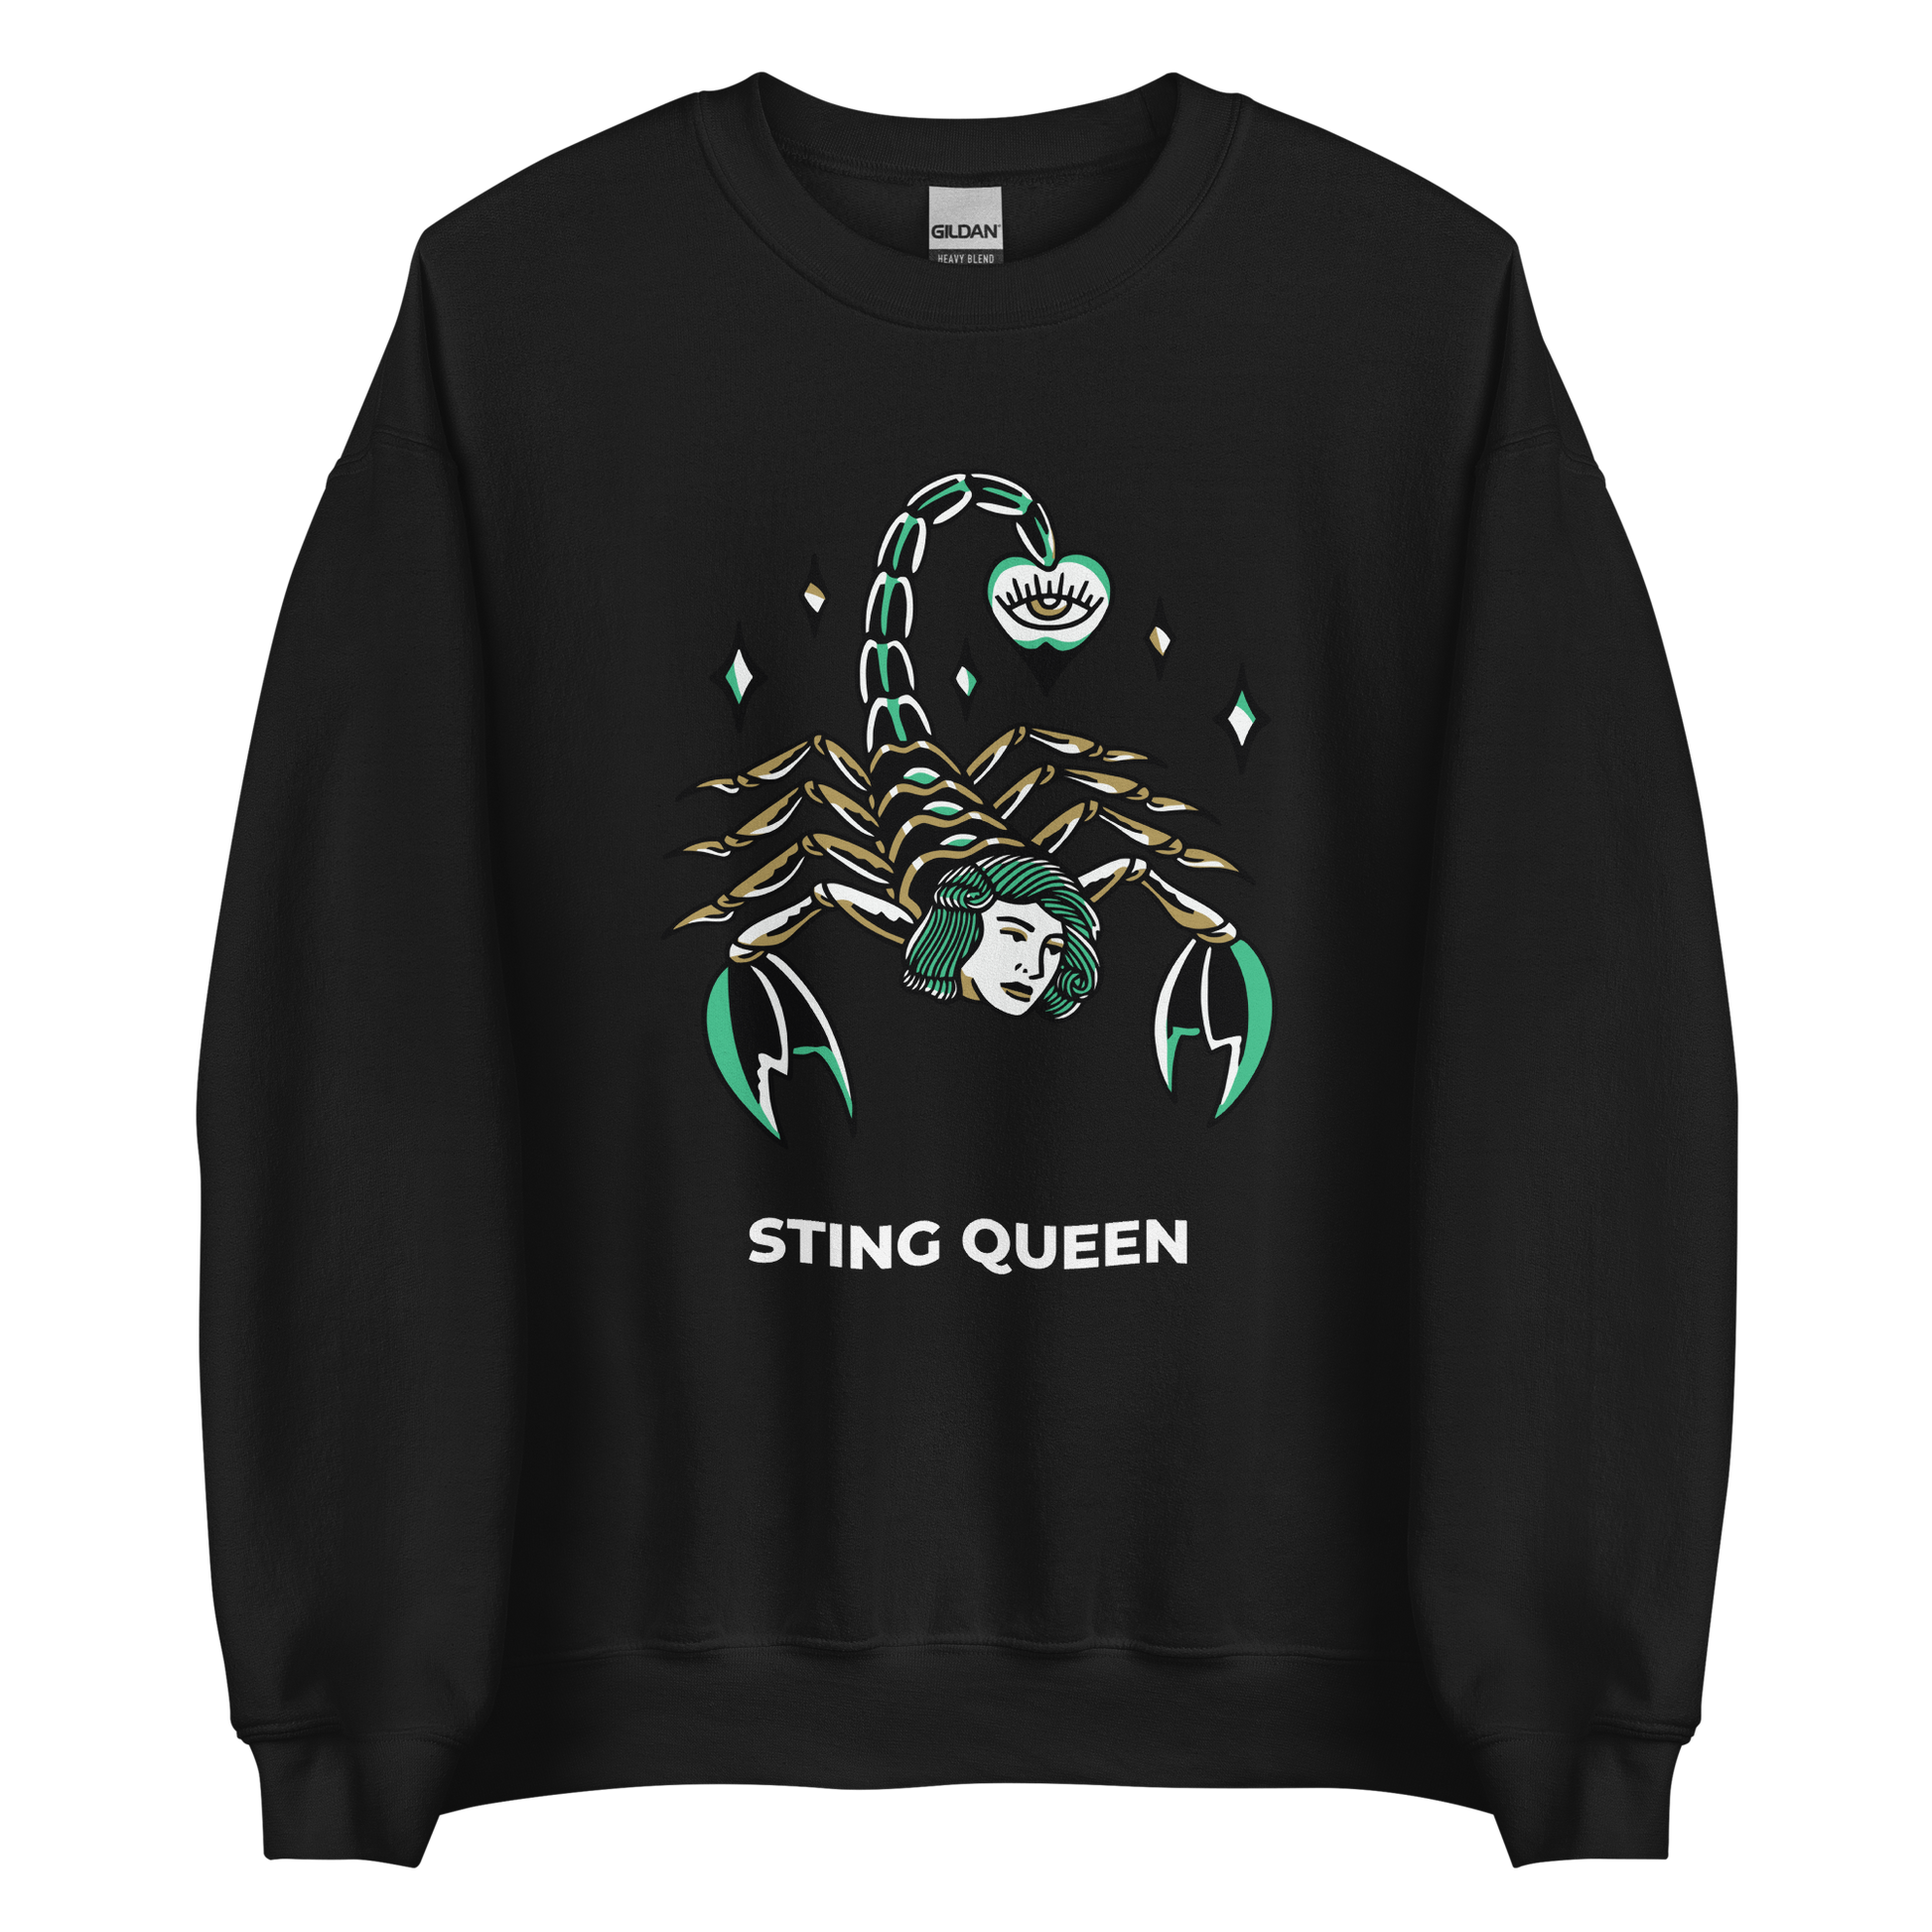 Black Scorpion Sweatshirt featuring the Sting Queen graphic on the chest - Cool Graphic Scorpion Sweatshirts - Boozy Fox